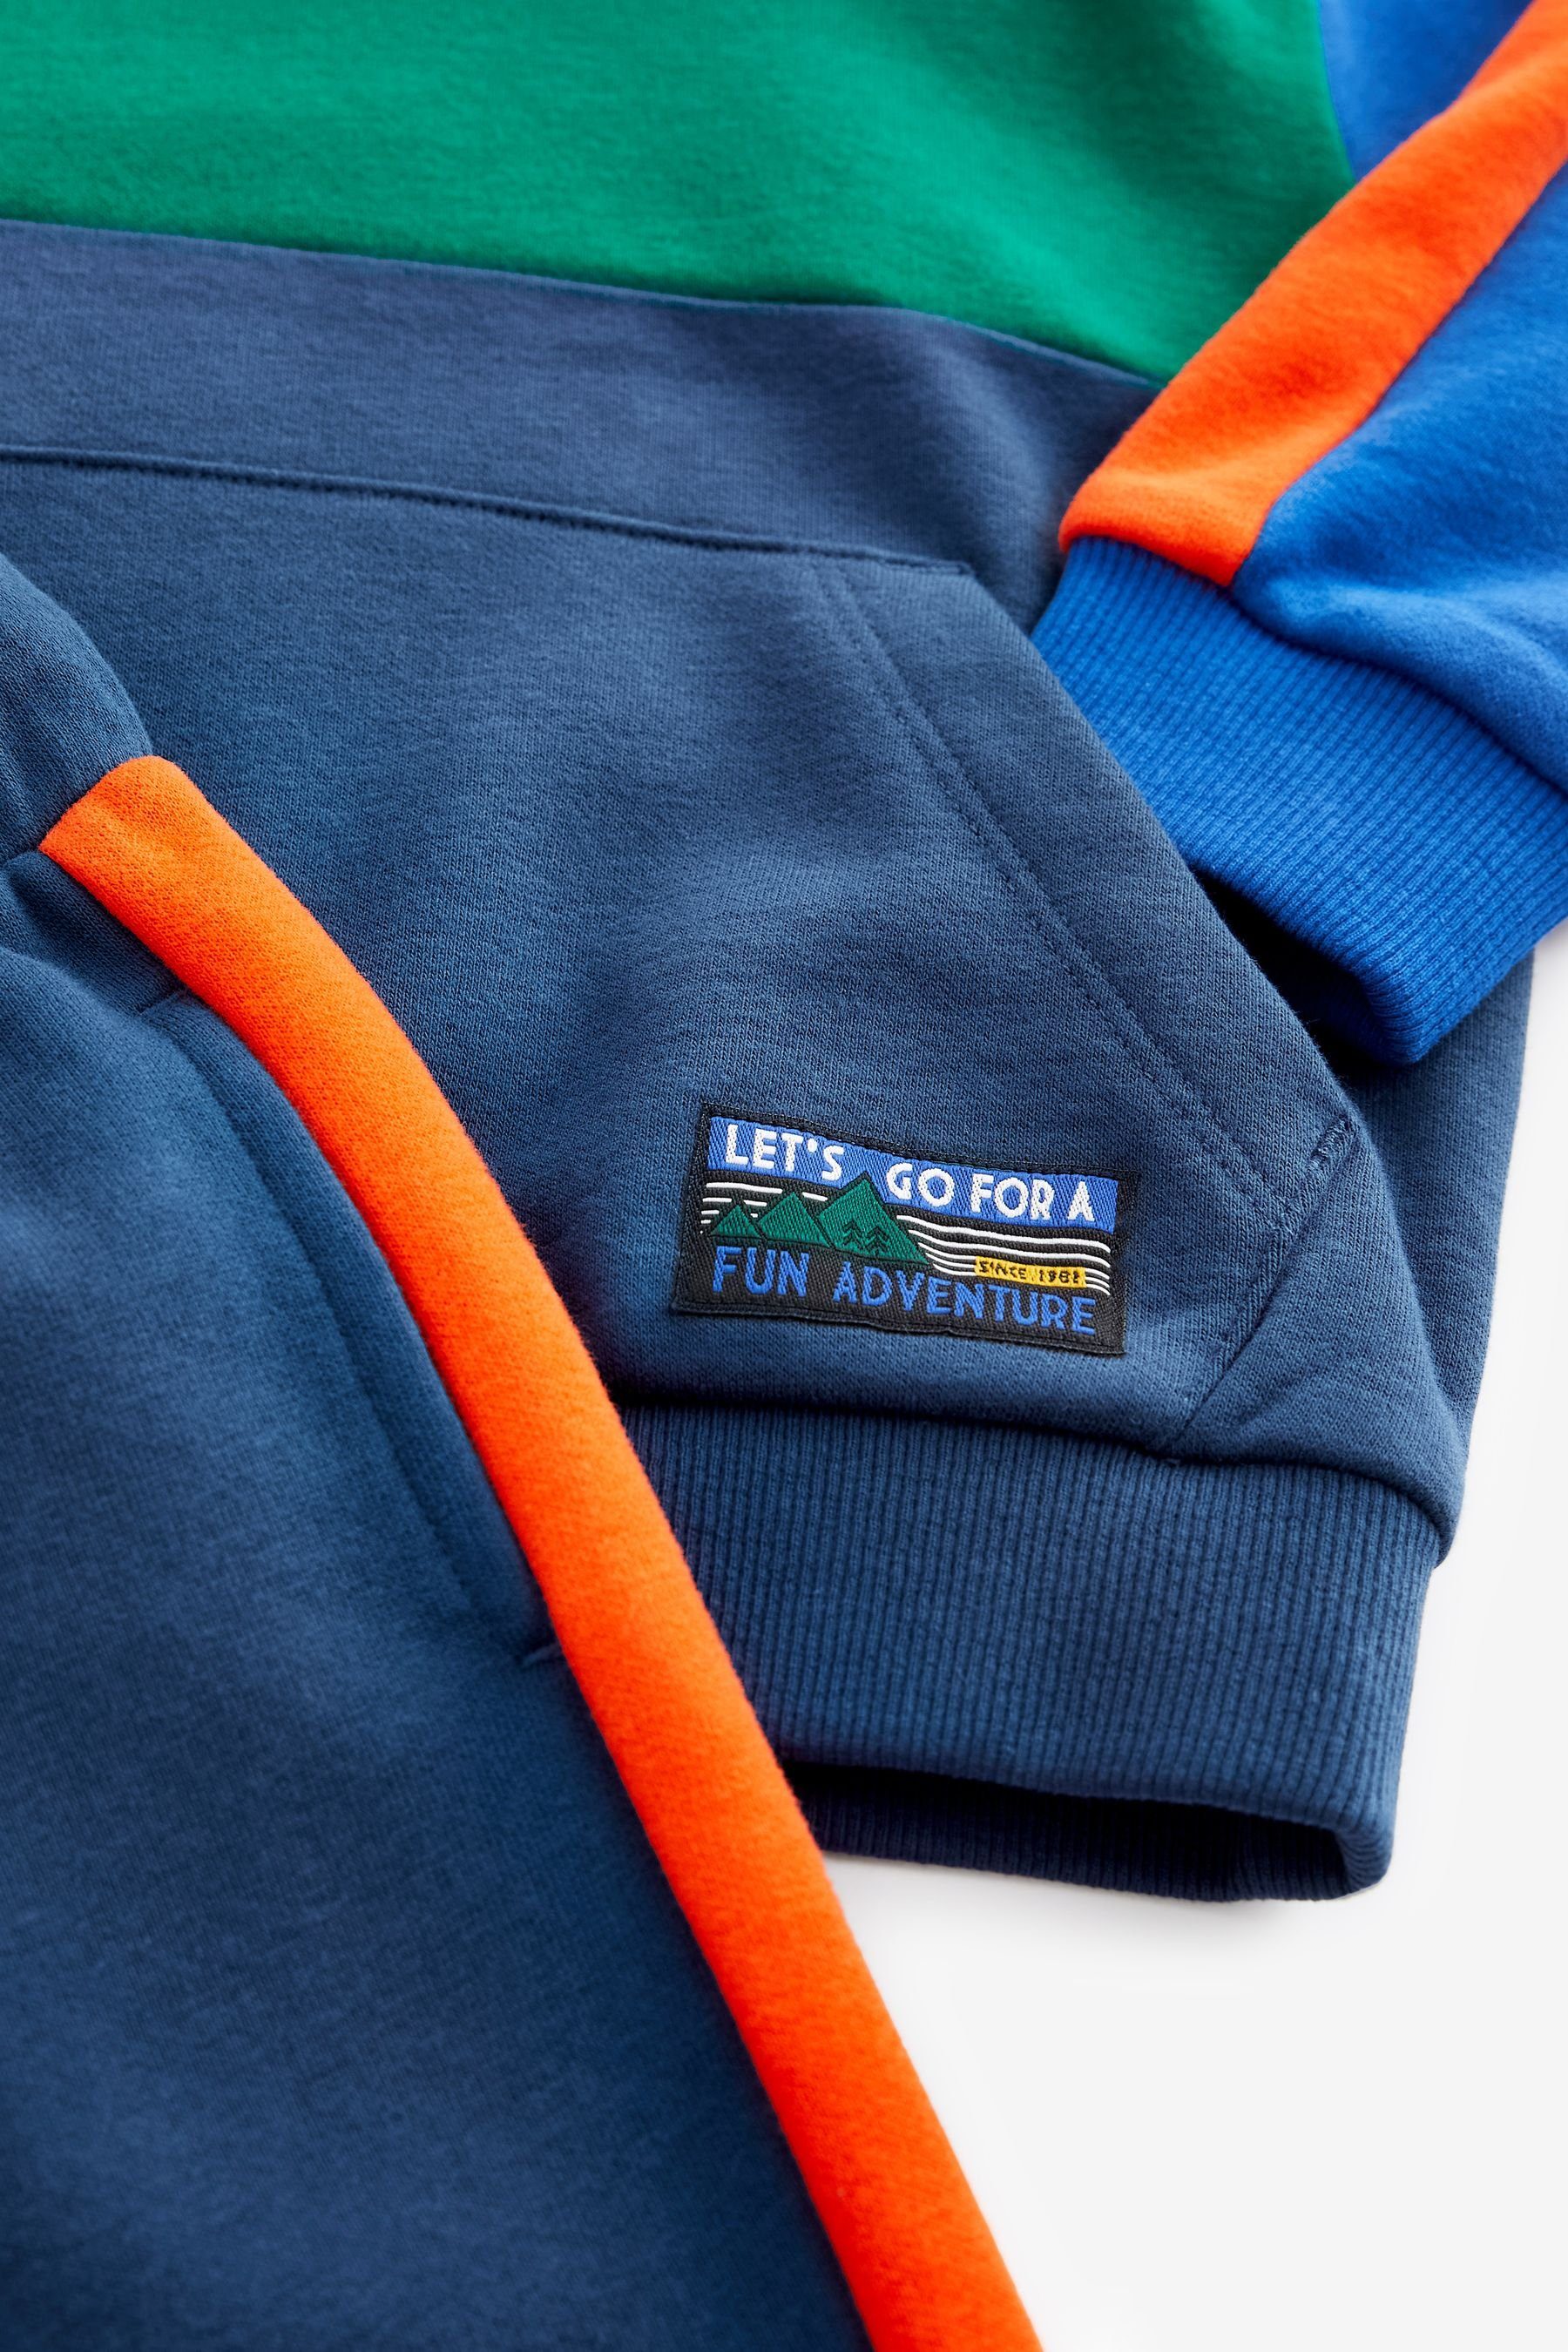 Jogginghose Blue/Green und Blockfarben-Kapuzensweatshirt Sweatanzug Next (2-tlg)